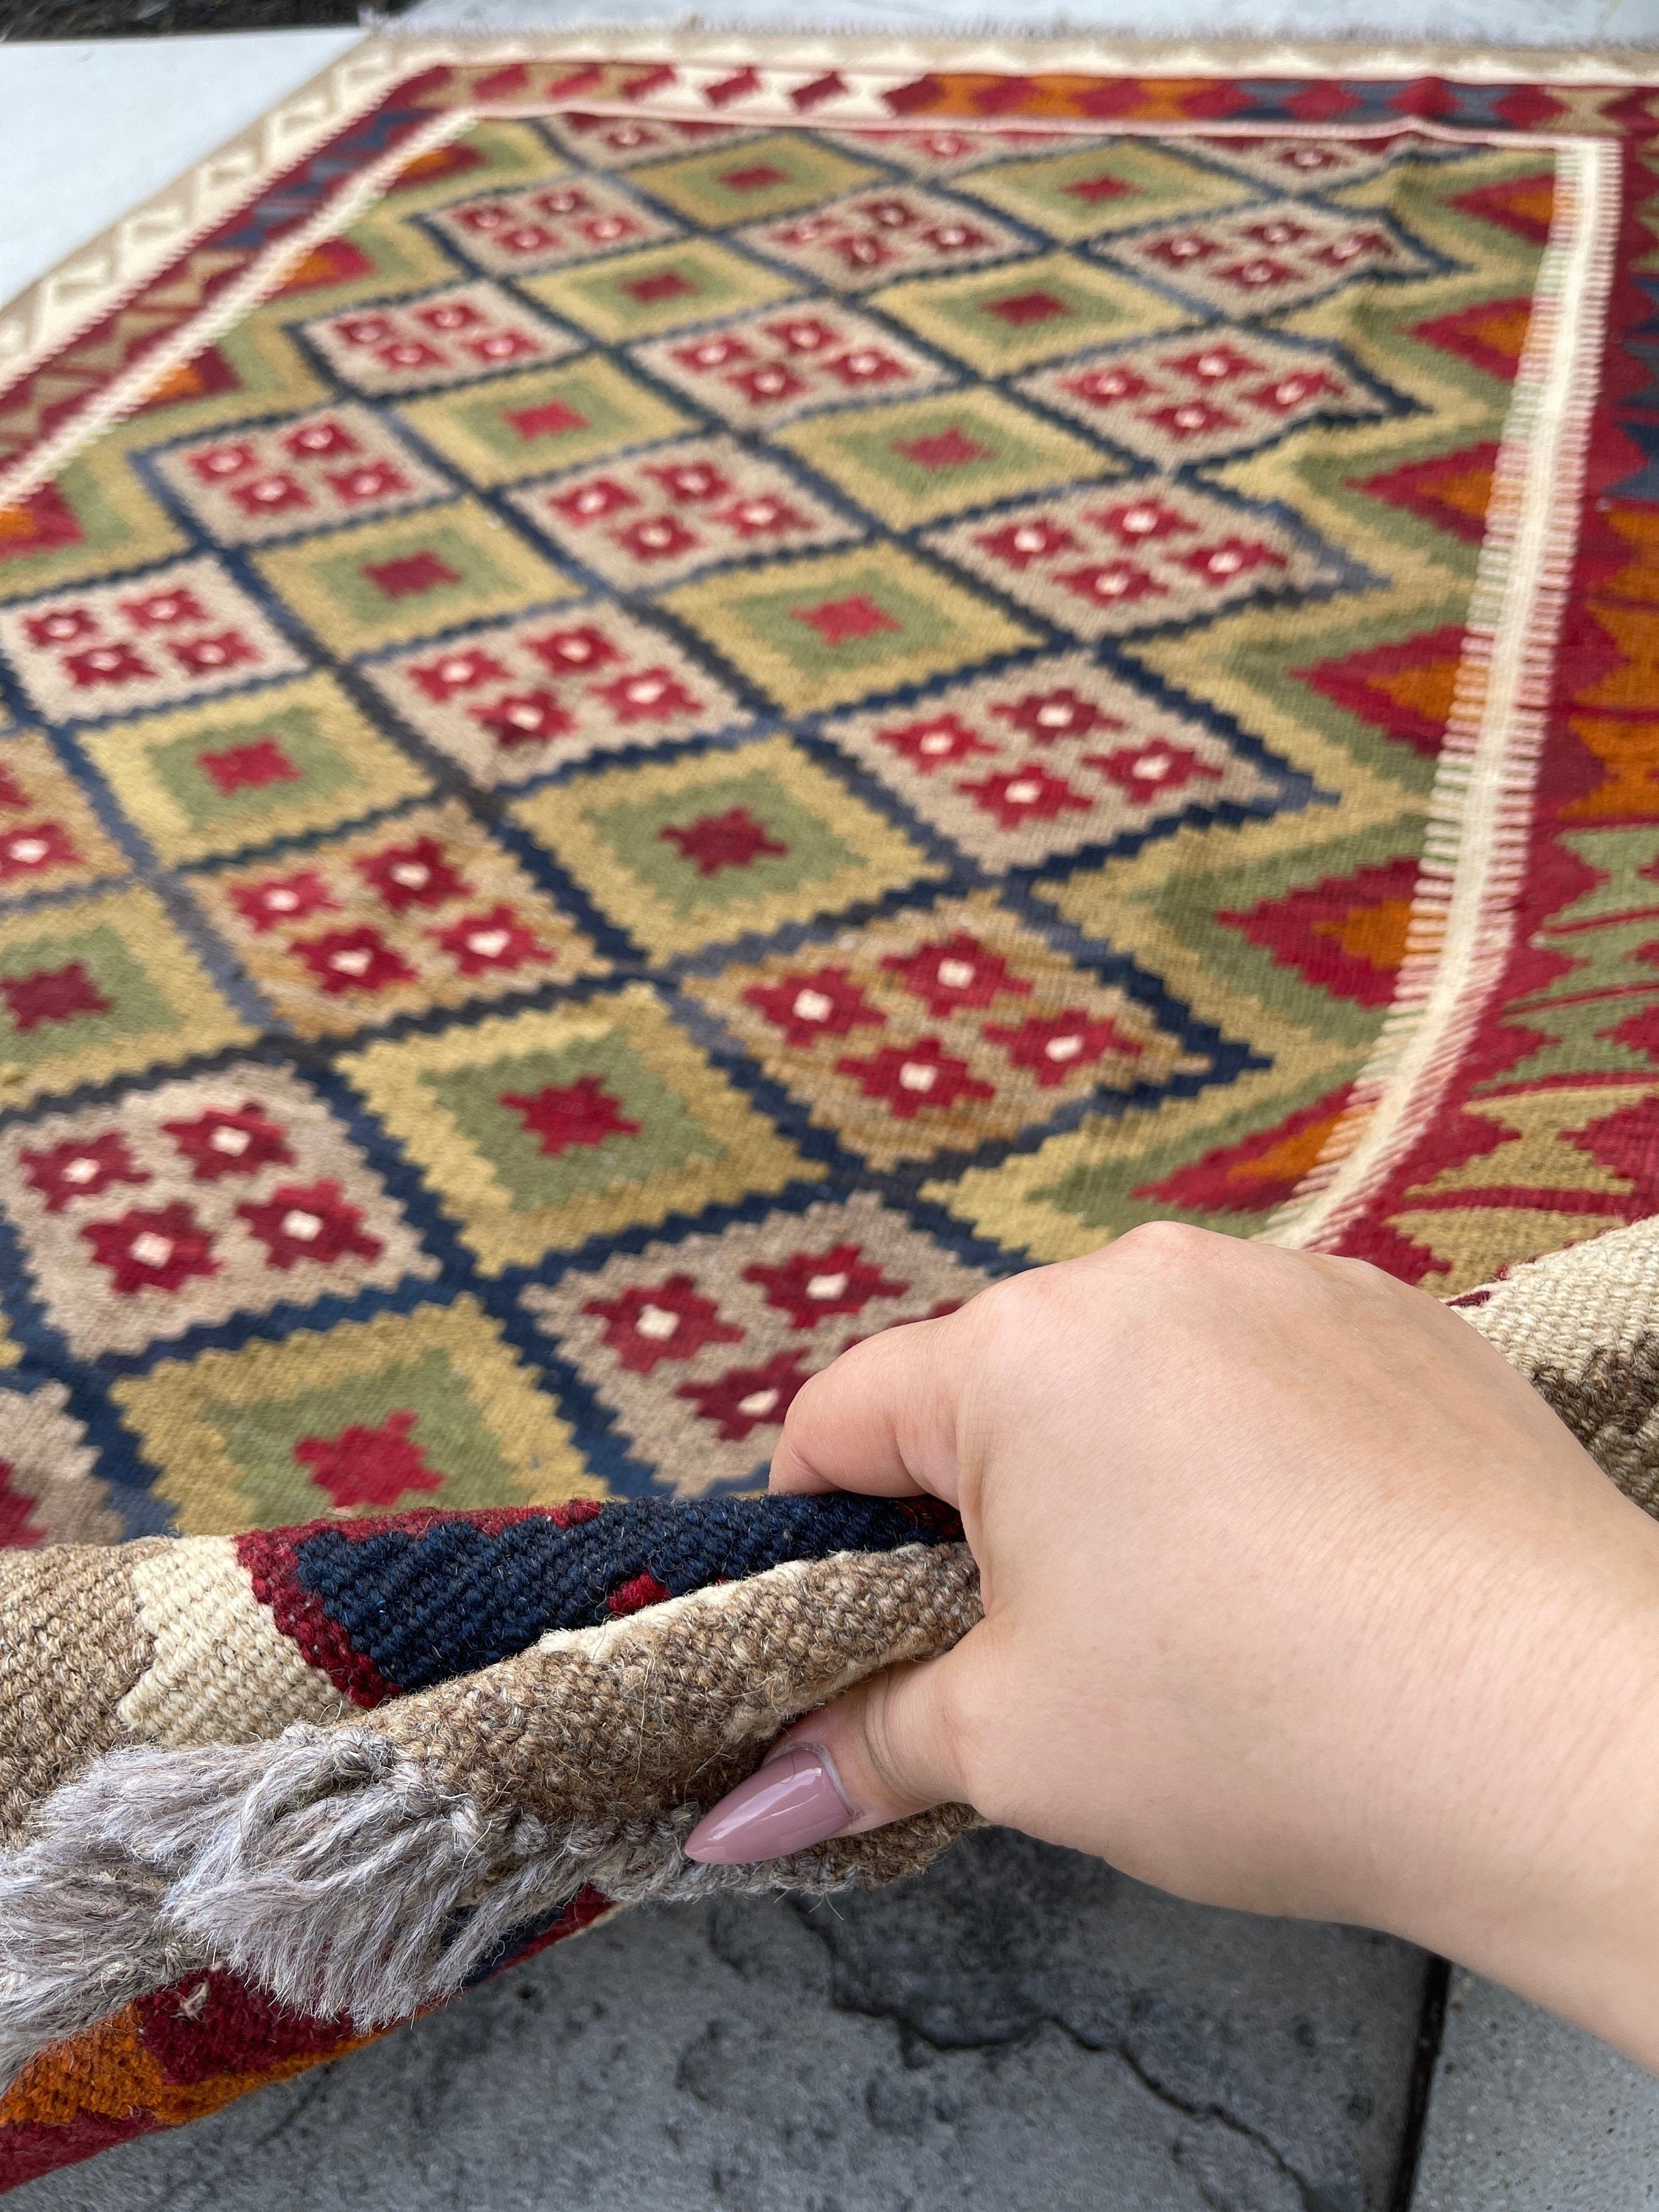 5x6 (150x180) Handmade Afghan Kilim Rug | Tan Beige Red Gold Sage Green | Flatweave Boho Tribal Turkish Moroccan Oriental Wool